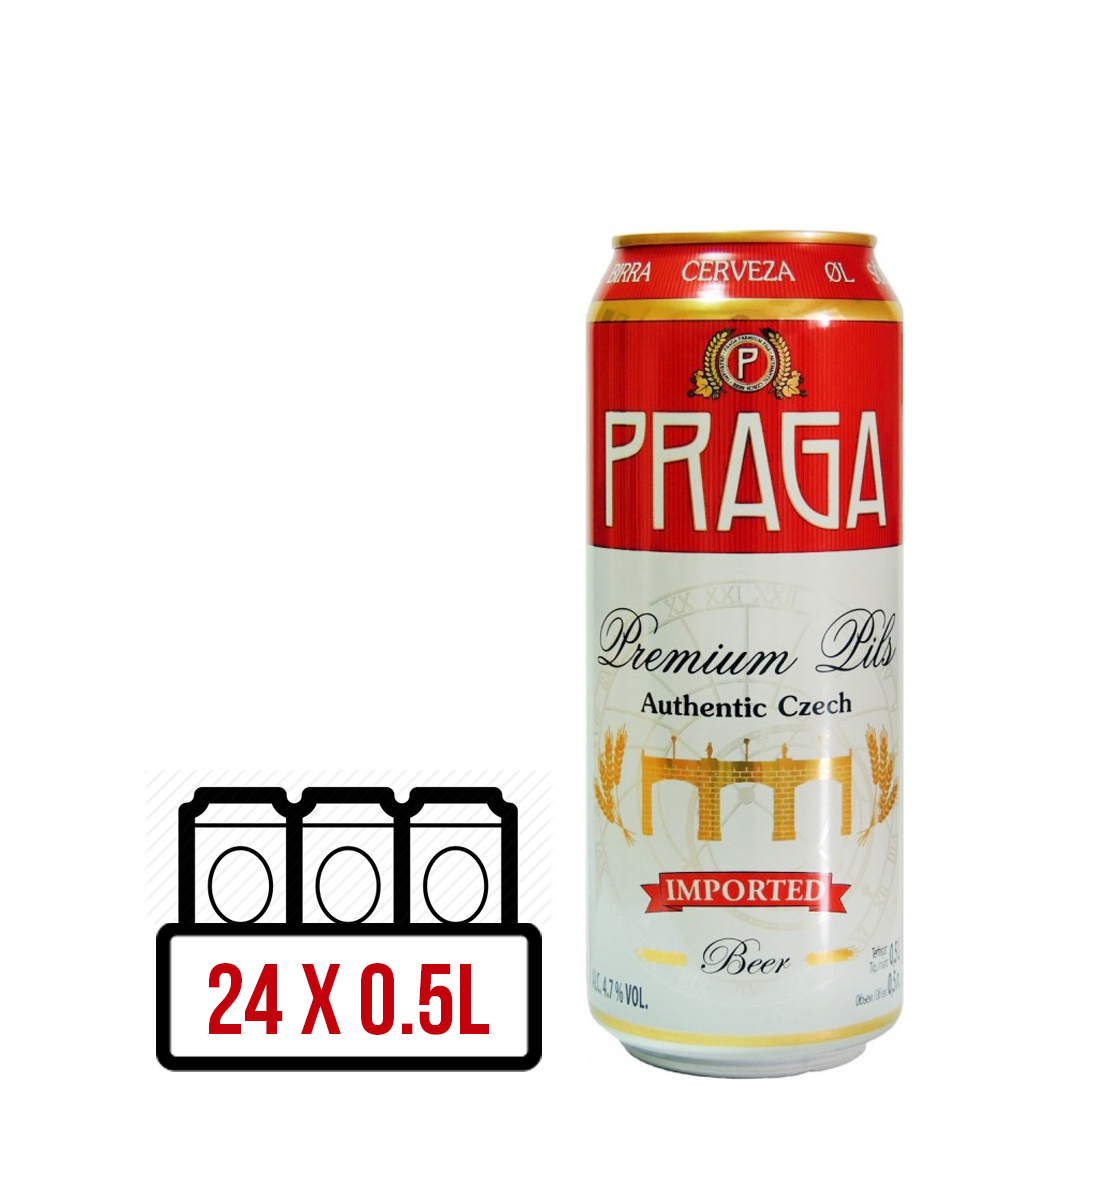 Praga Premium Pils BAX 24 DZ. X 0.5L